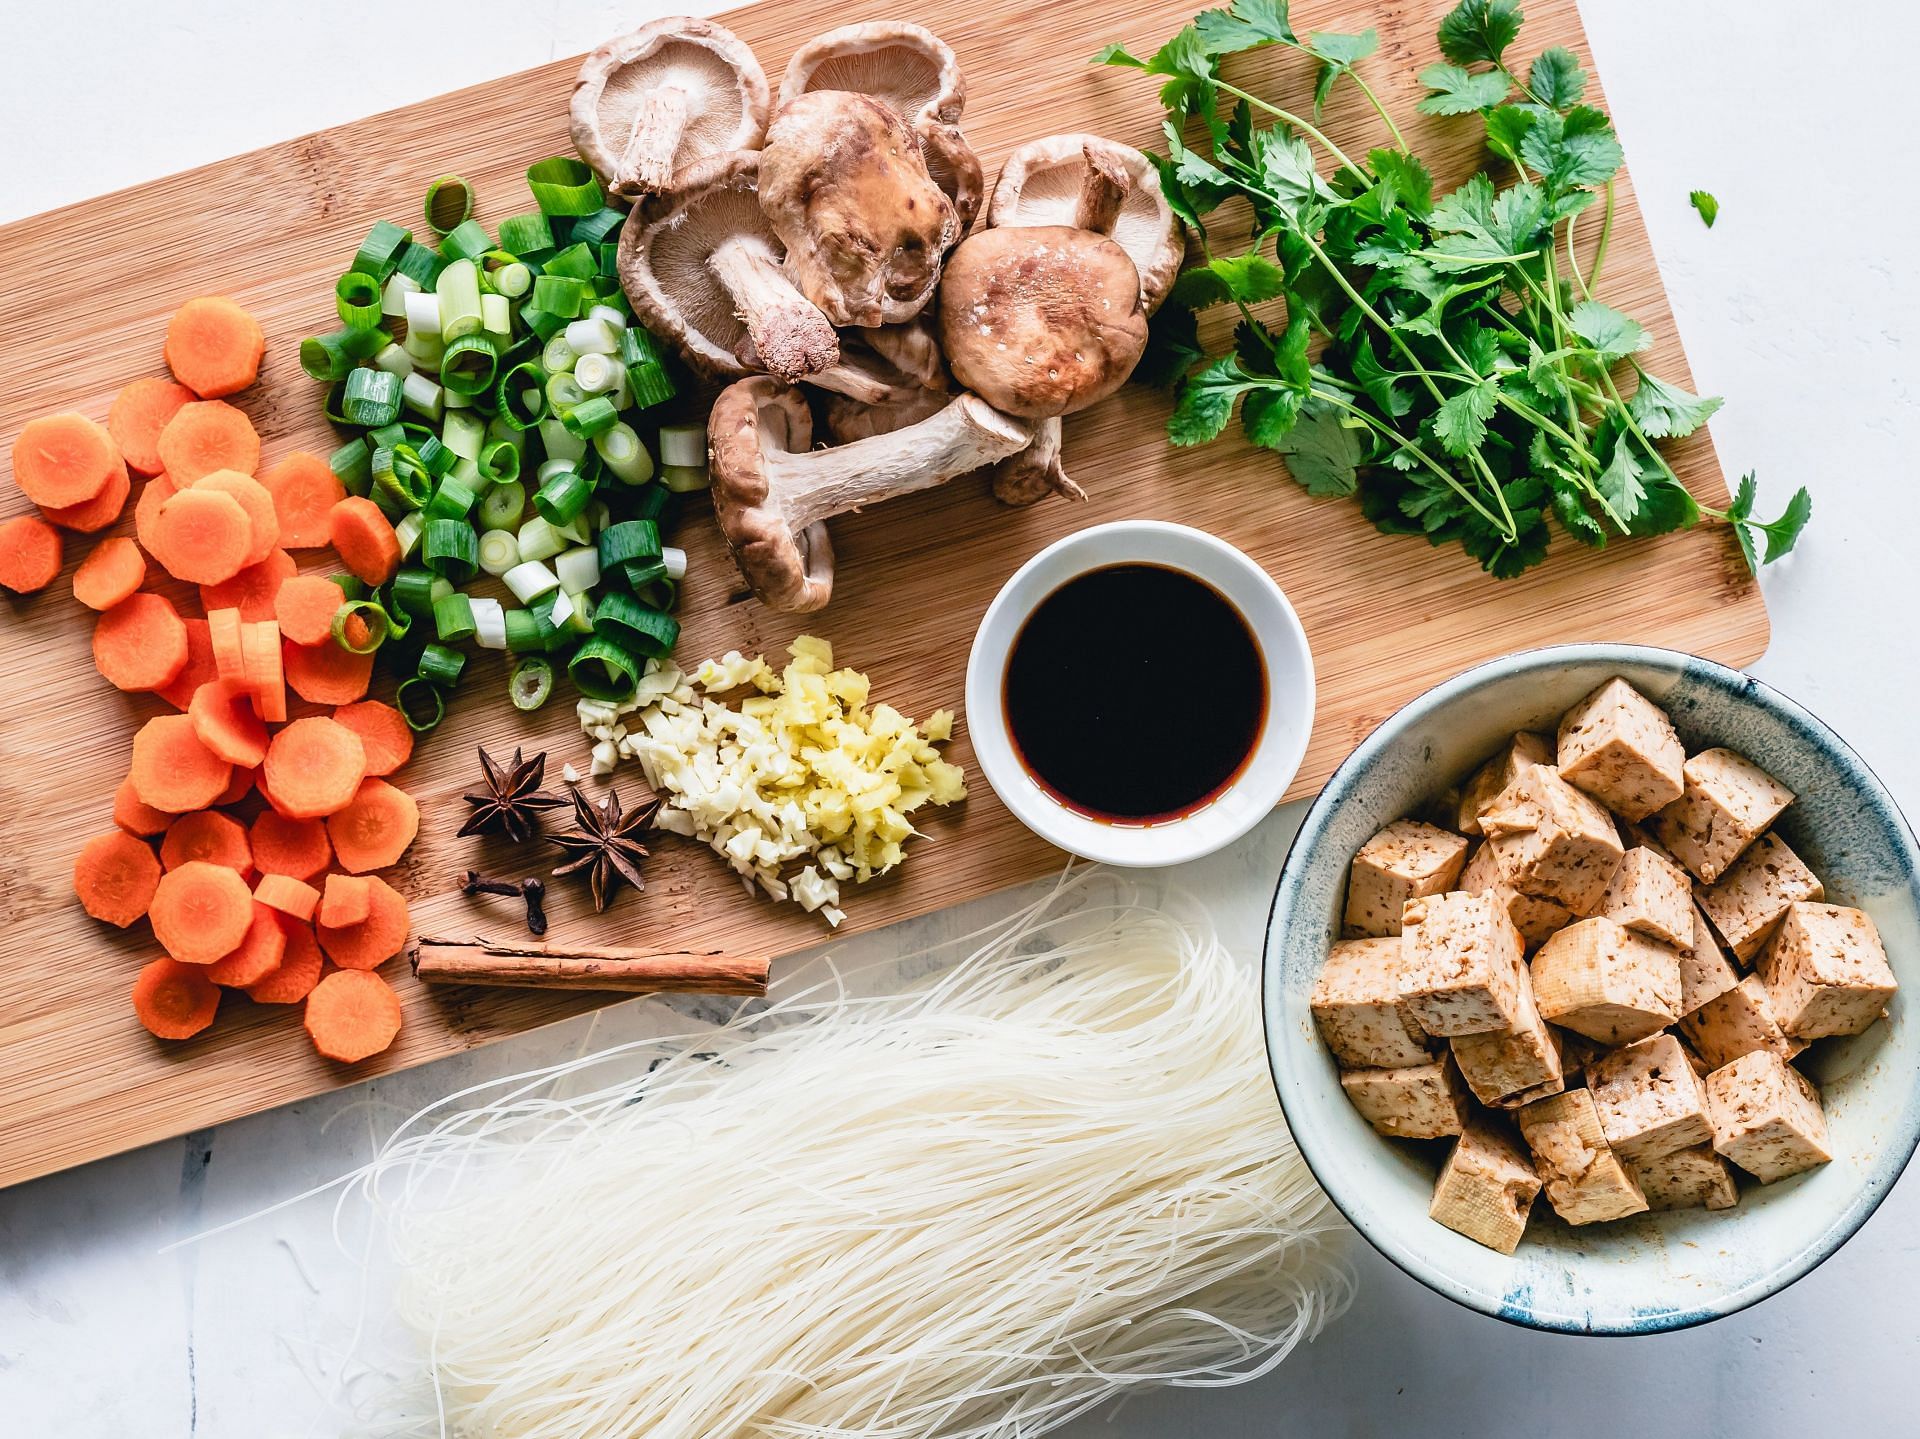 Tofu and mushrooms. (Image credits: Pexels/ Ella Olsson)